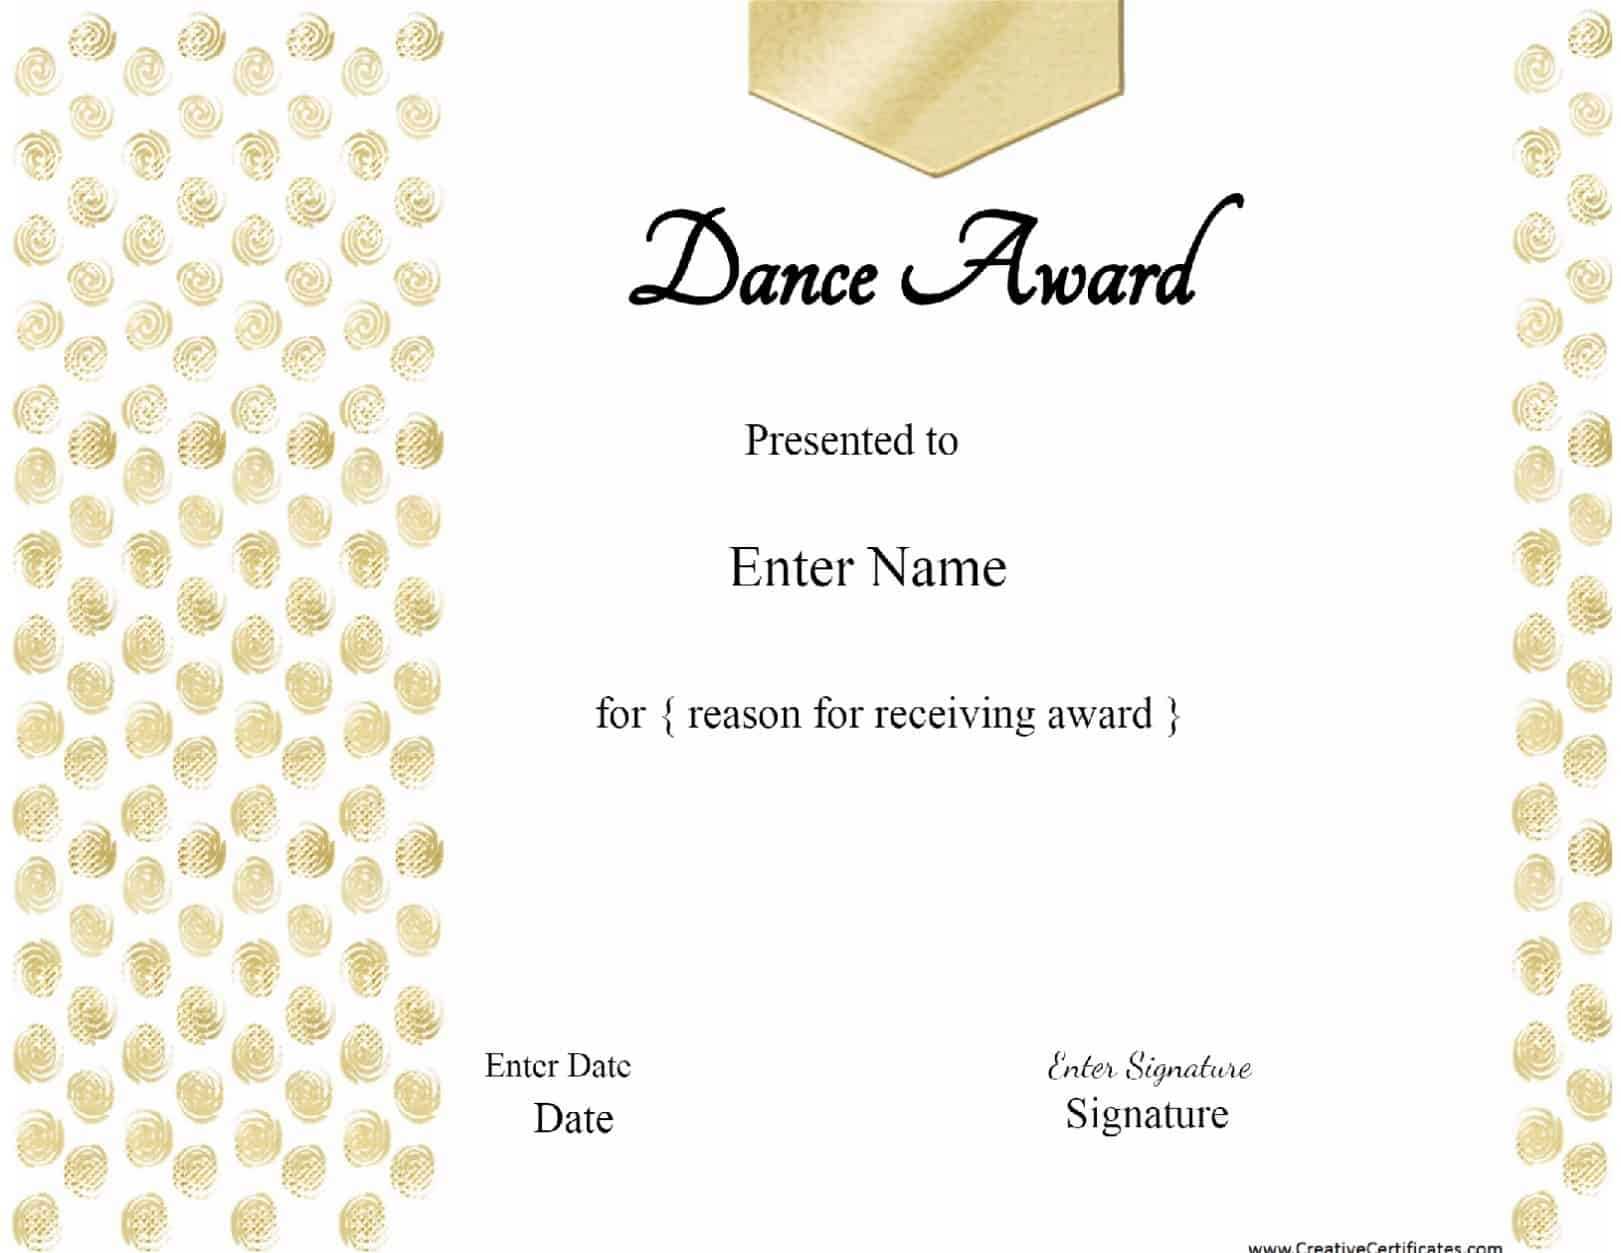 Dance Certificate Templates | 13+ Formats | Free Printable In Dance Certificate Template